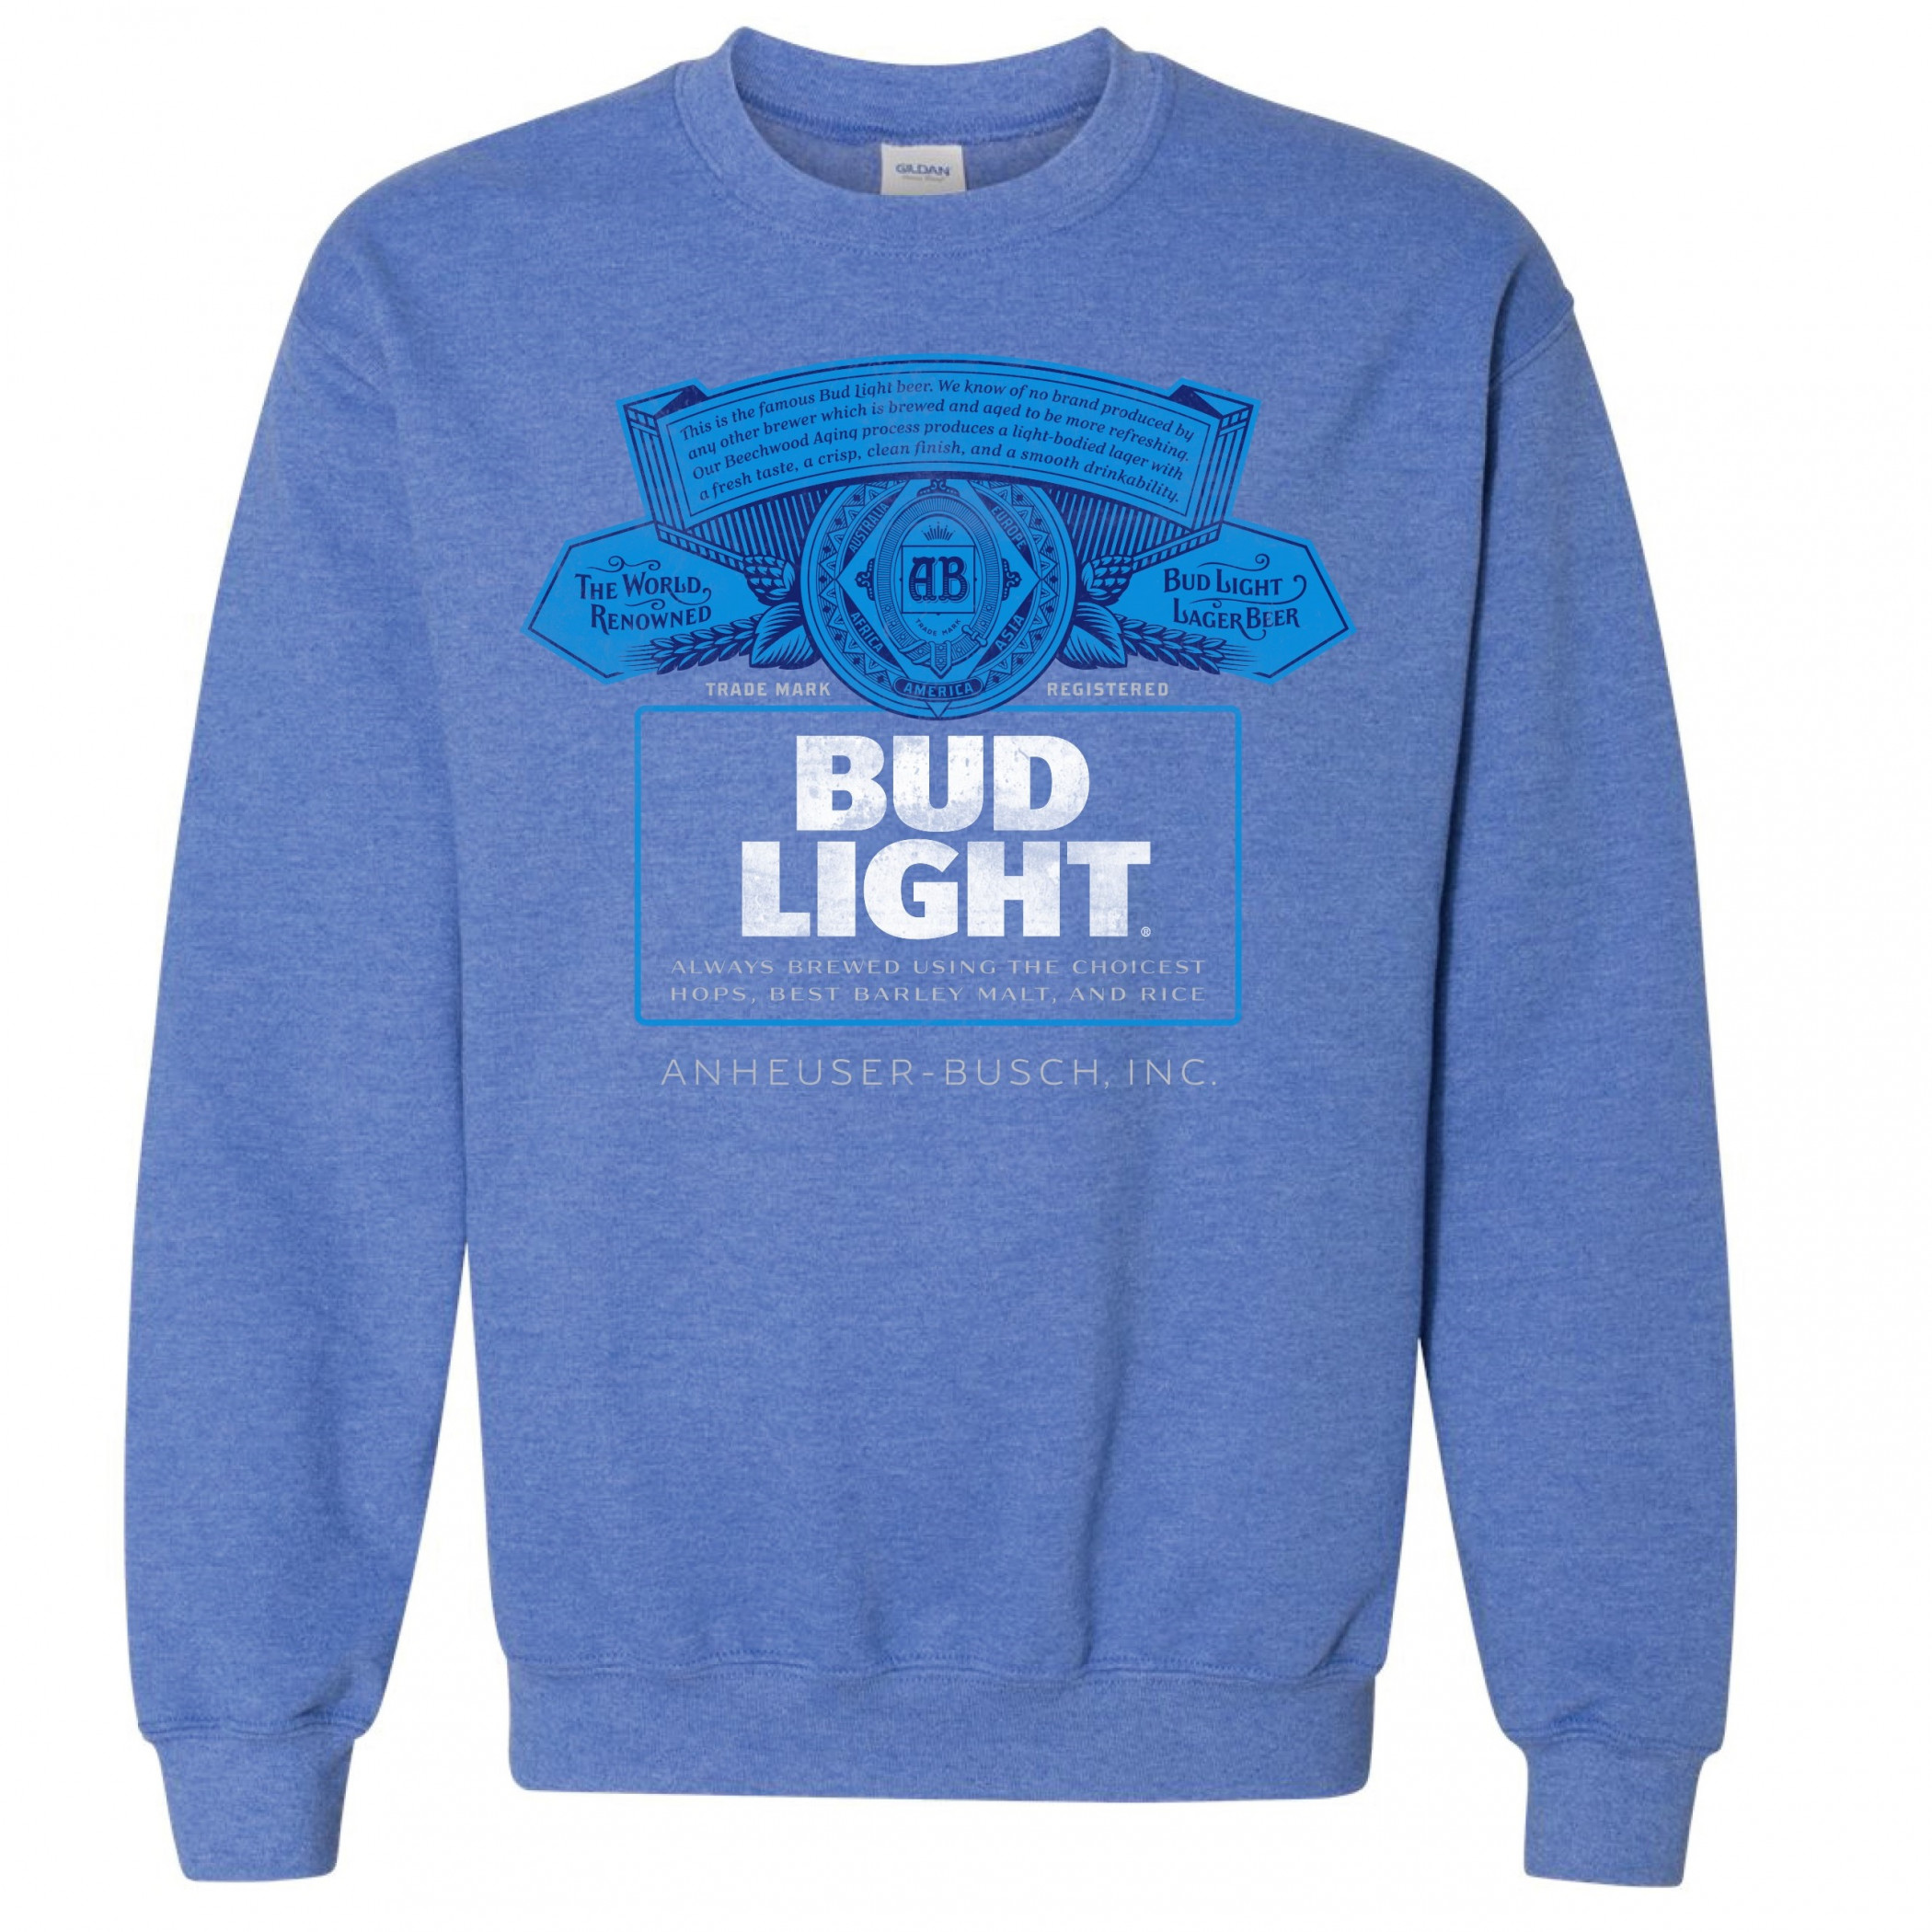 Bud Light Bottle Label Crewneck Sweatshirt